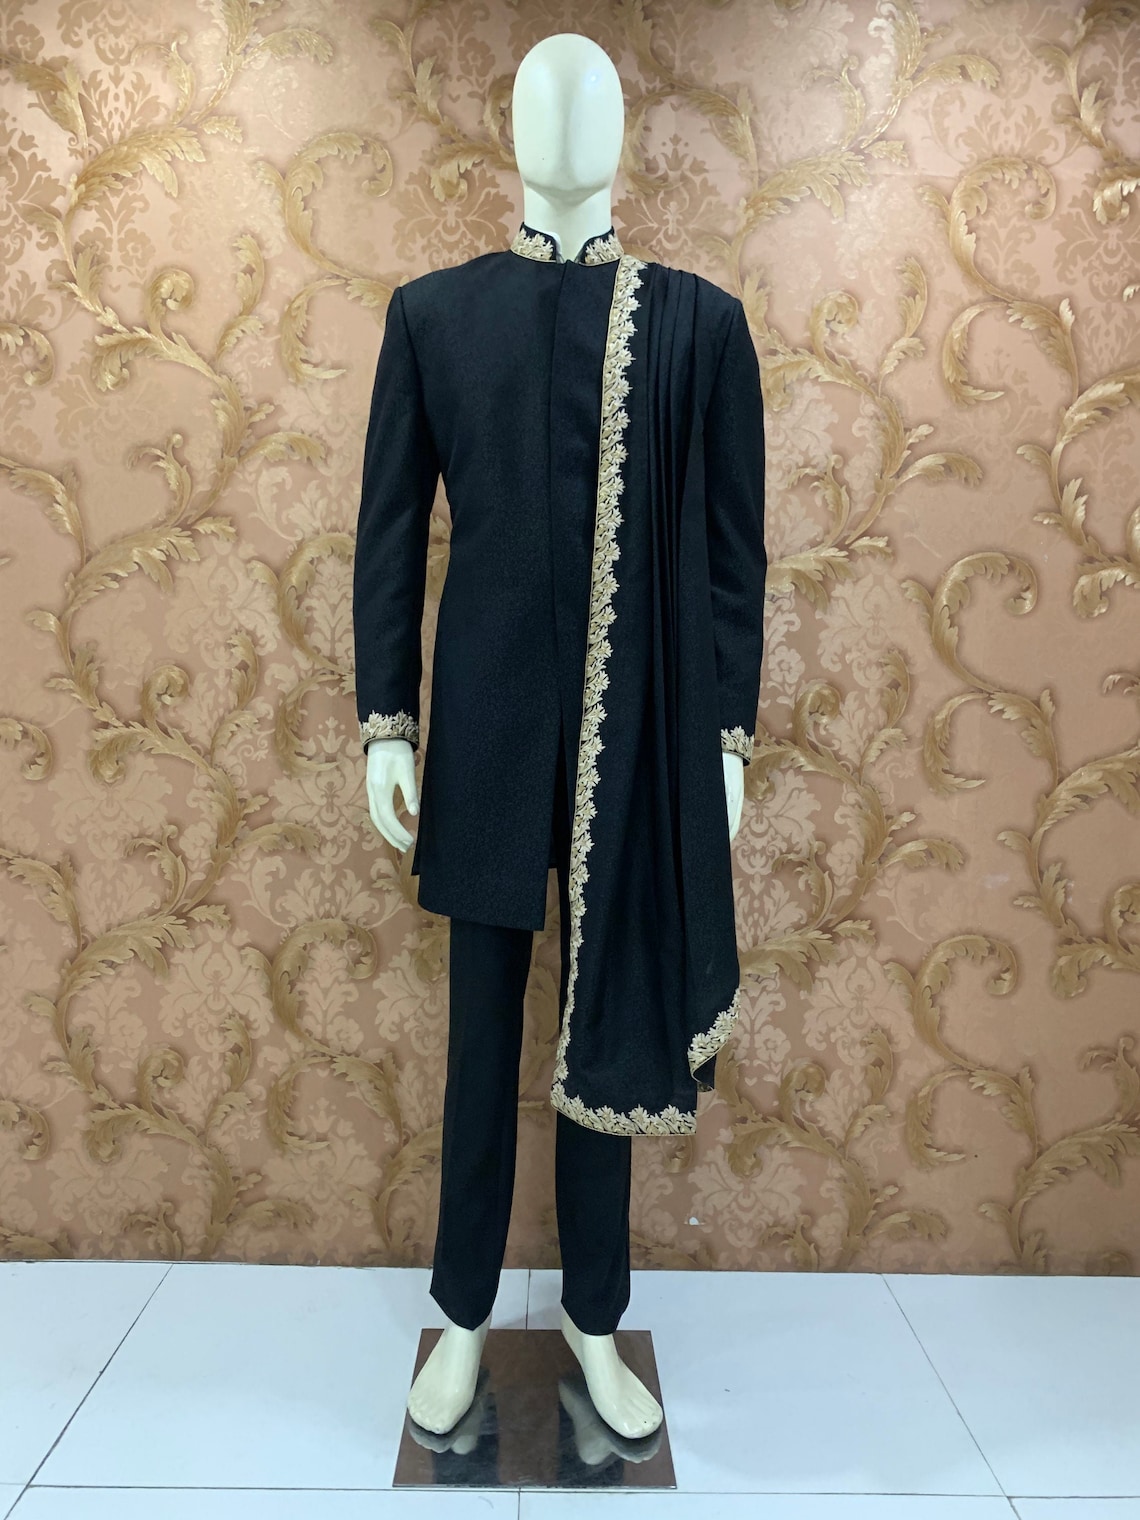 Jodhpuri Suit Bandhgala Designer Sherwani For Groom Wedding | Etsy